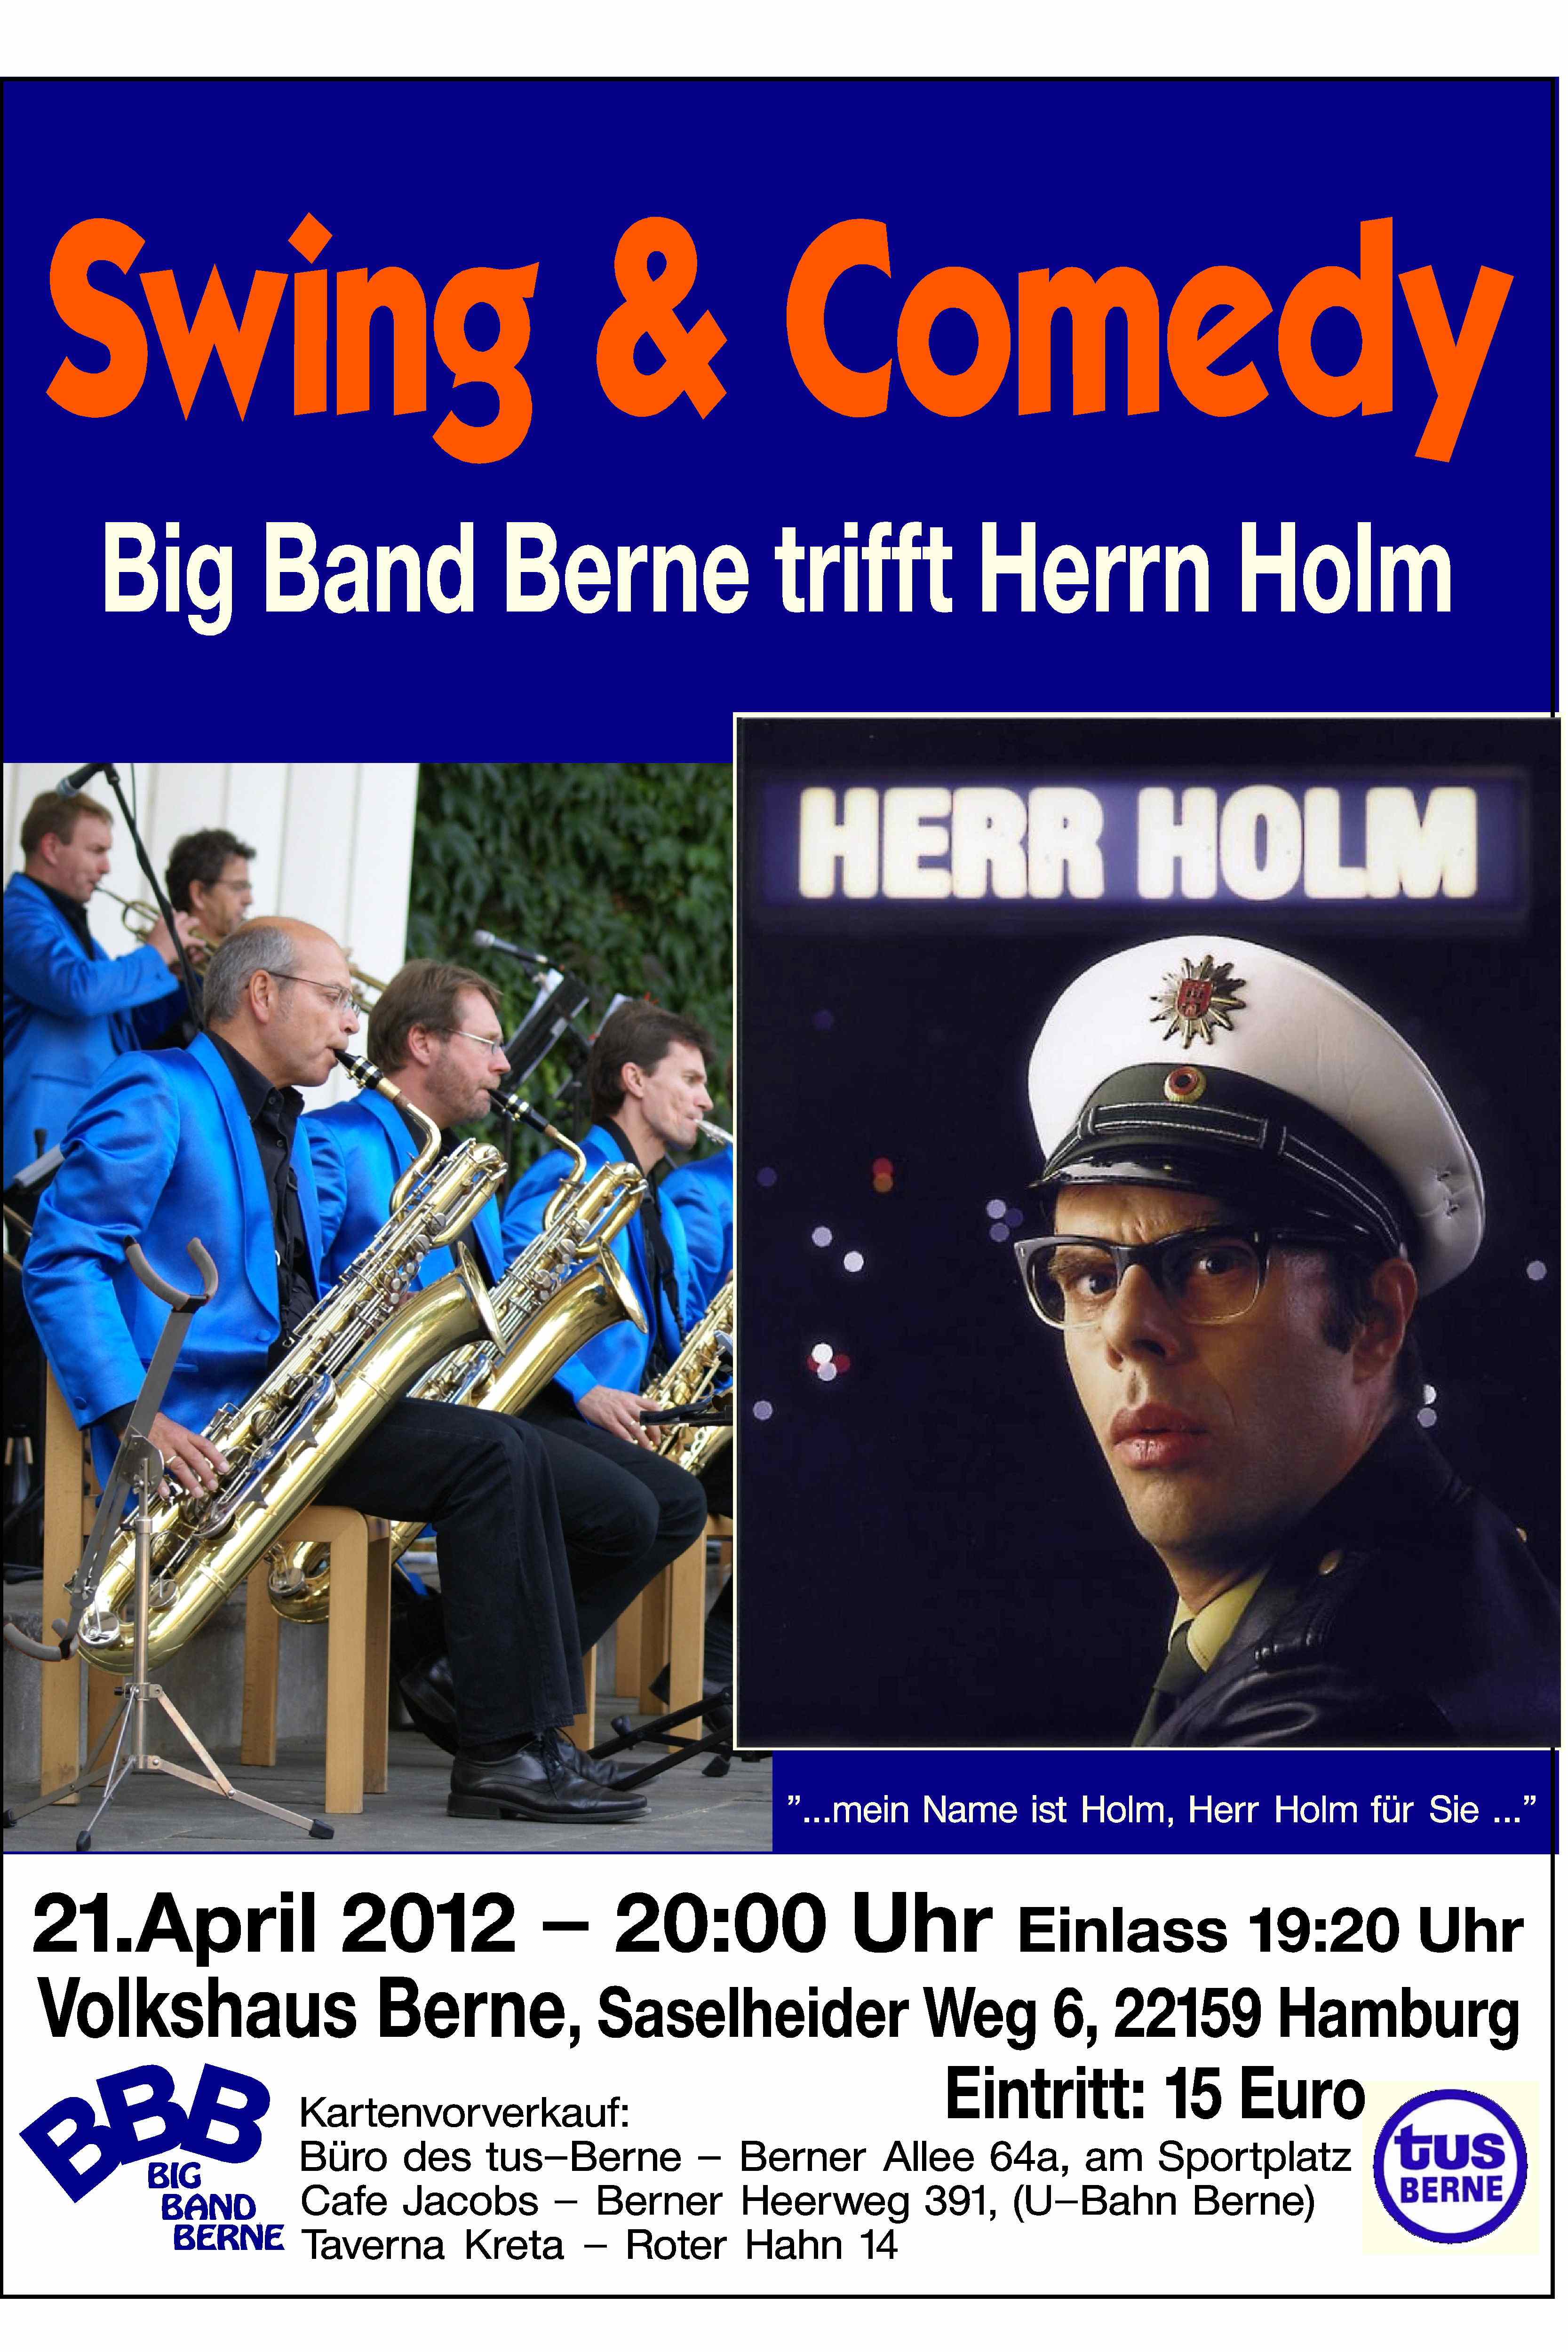 BBB Herr Holm Big Band Berne jazzinhamburg